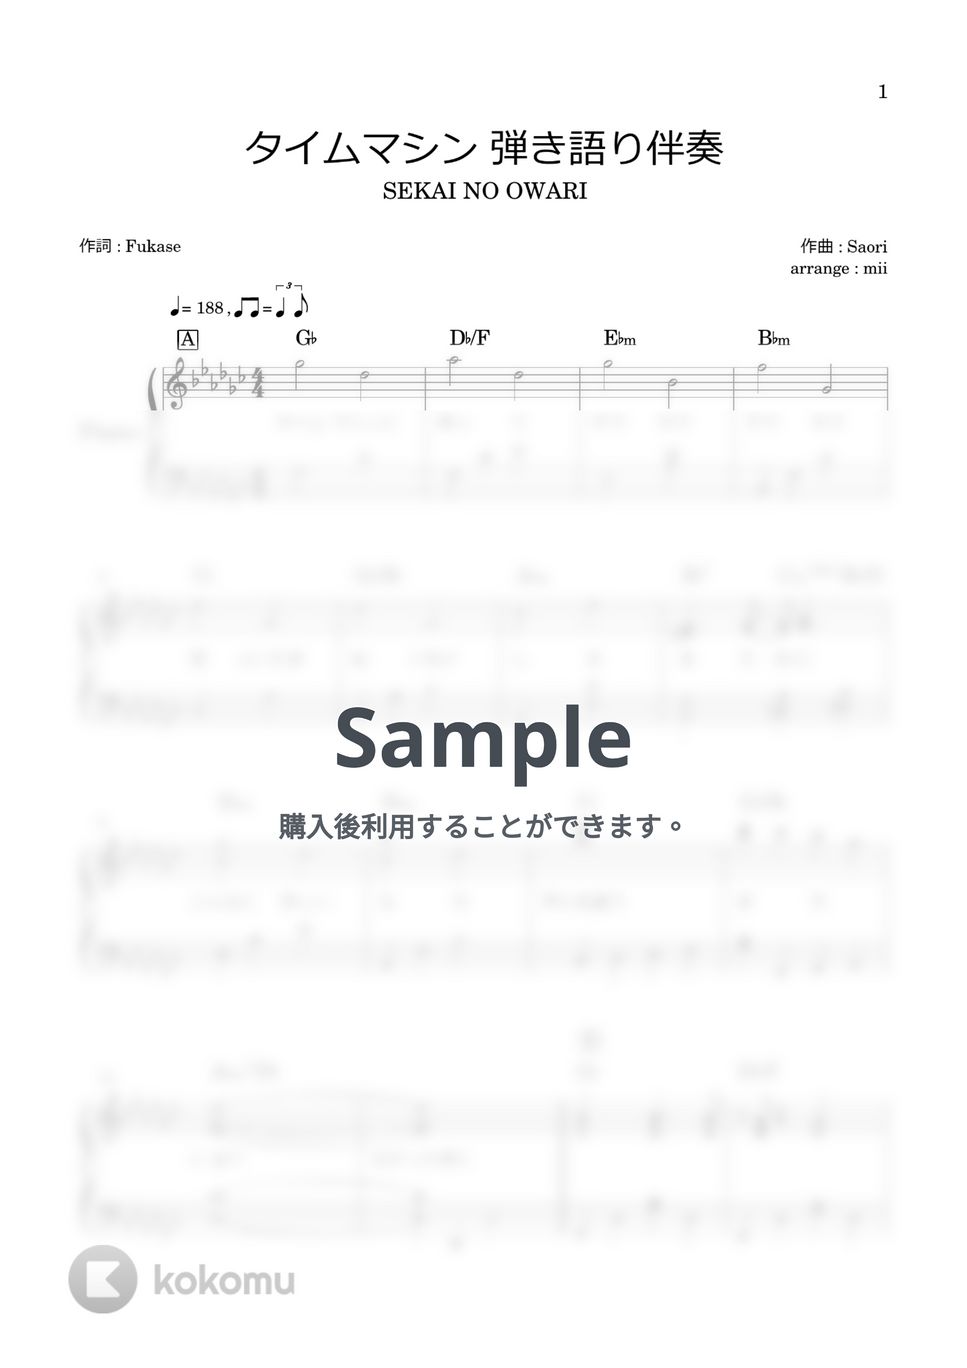 SEKAI NO OWARI - タイムマシン (弾き語り伴奏のみ) by miiの楽譜棚